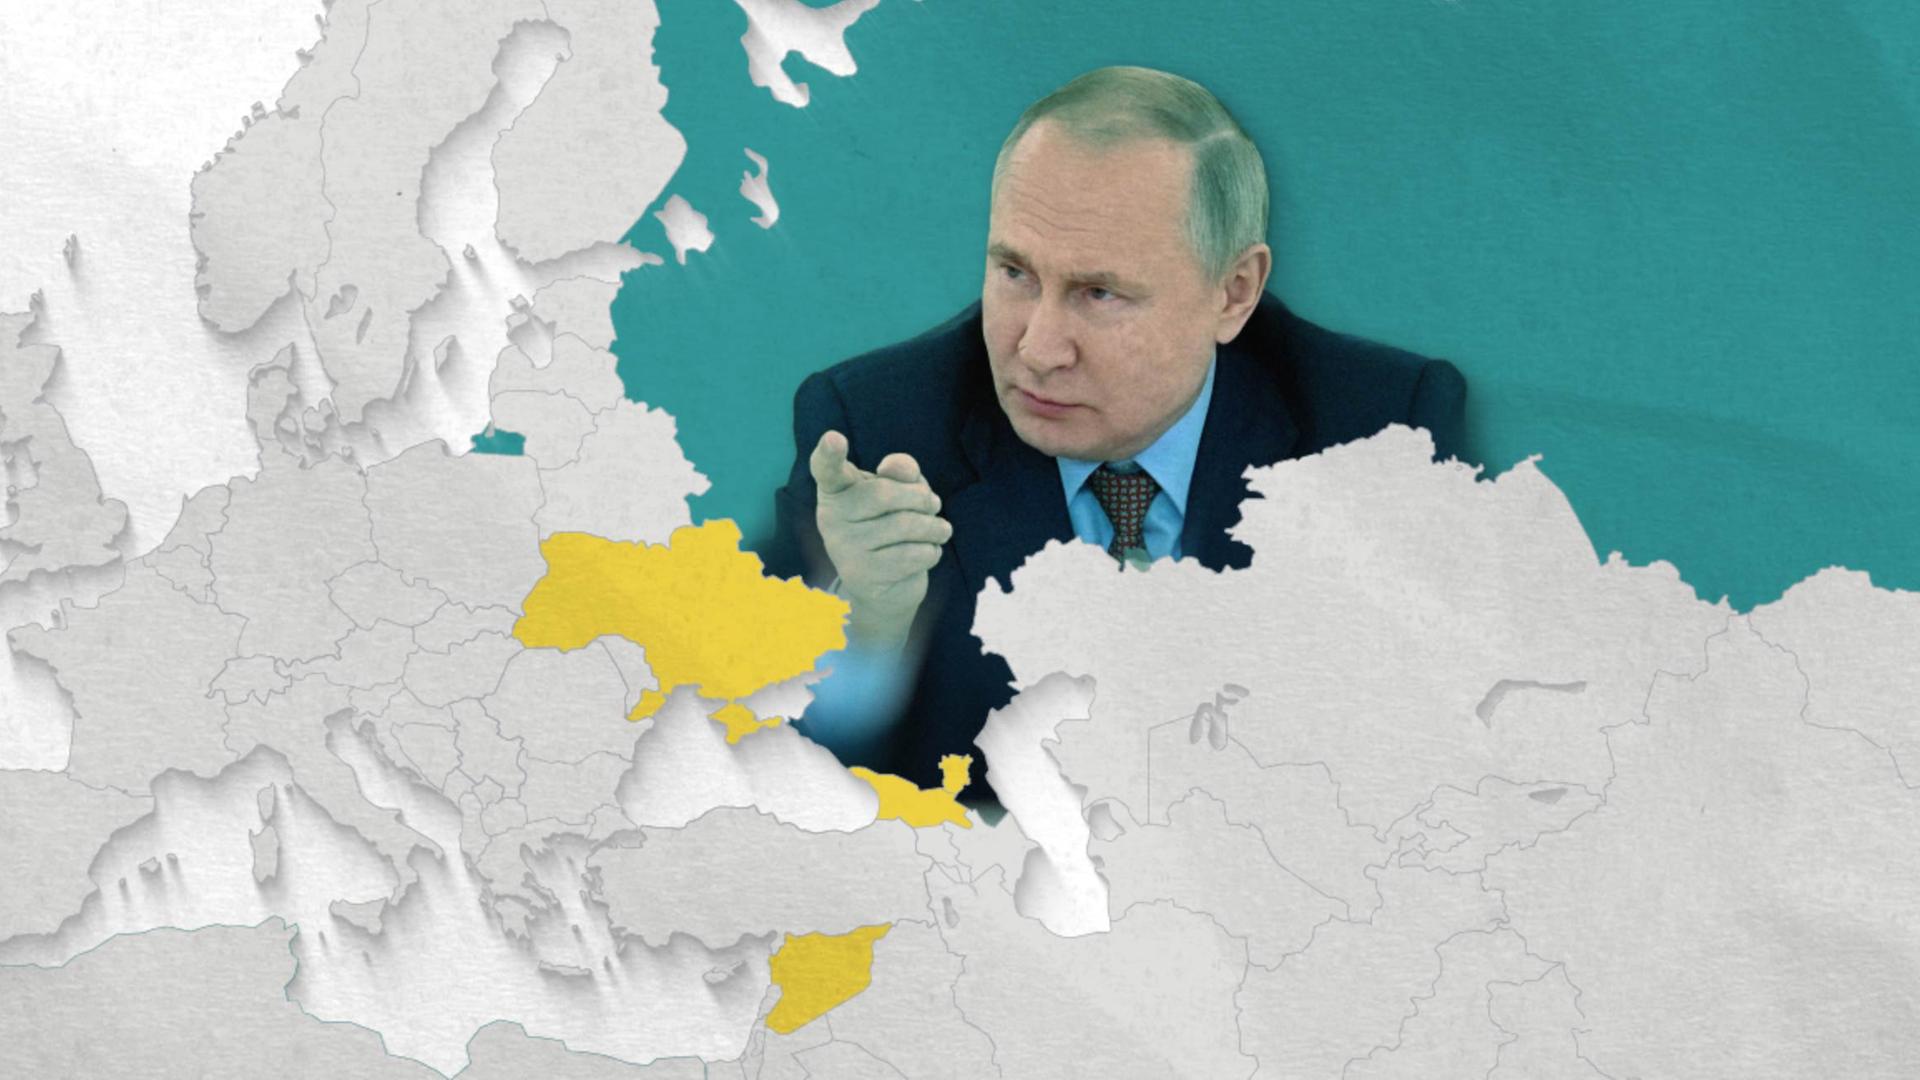 Putin on the map with Russia, Ukraine, Georgia and Syria